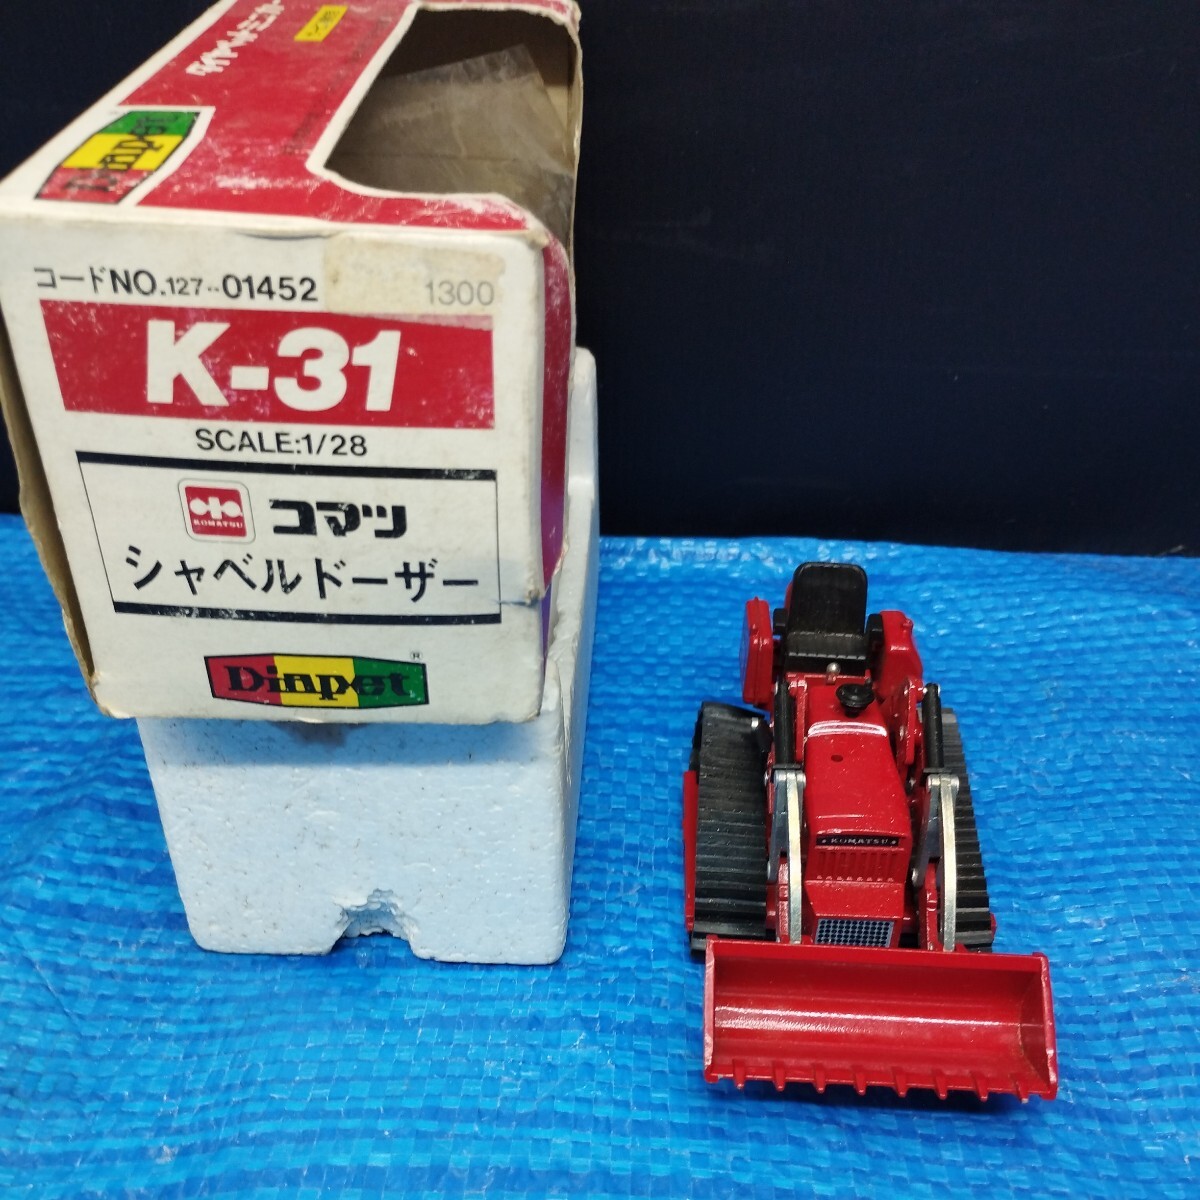 K-31 Komatsu shovel do- The -! Yonezawa, Diapet minicar series! die-cast made!